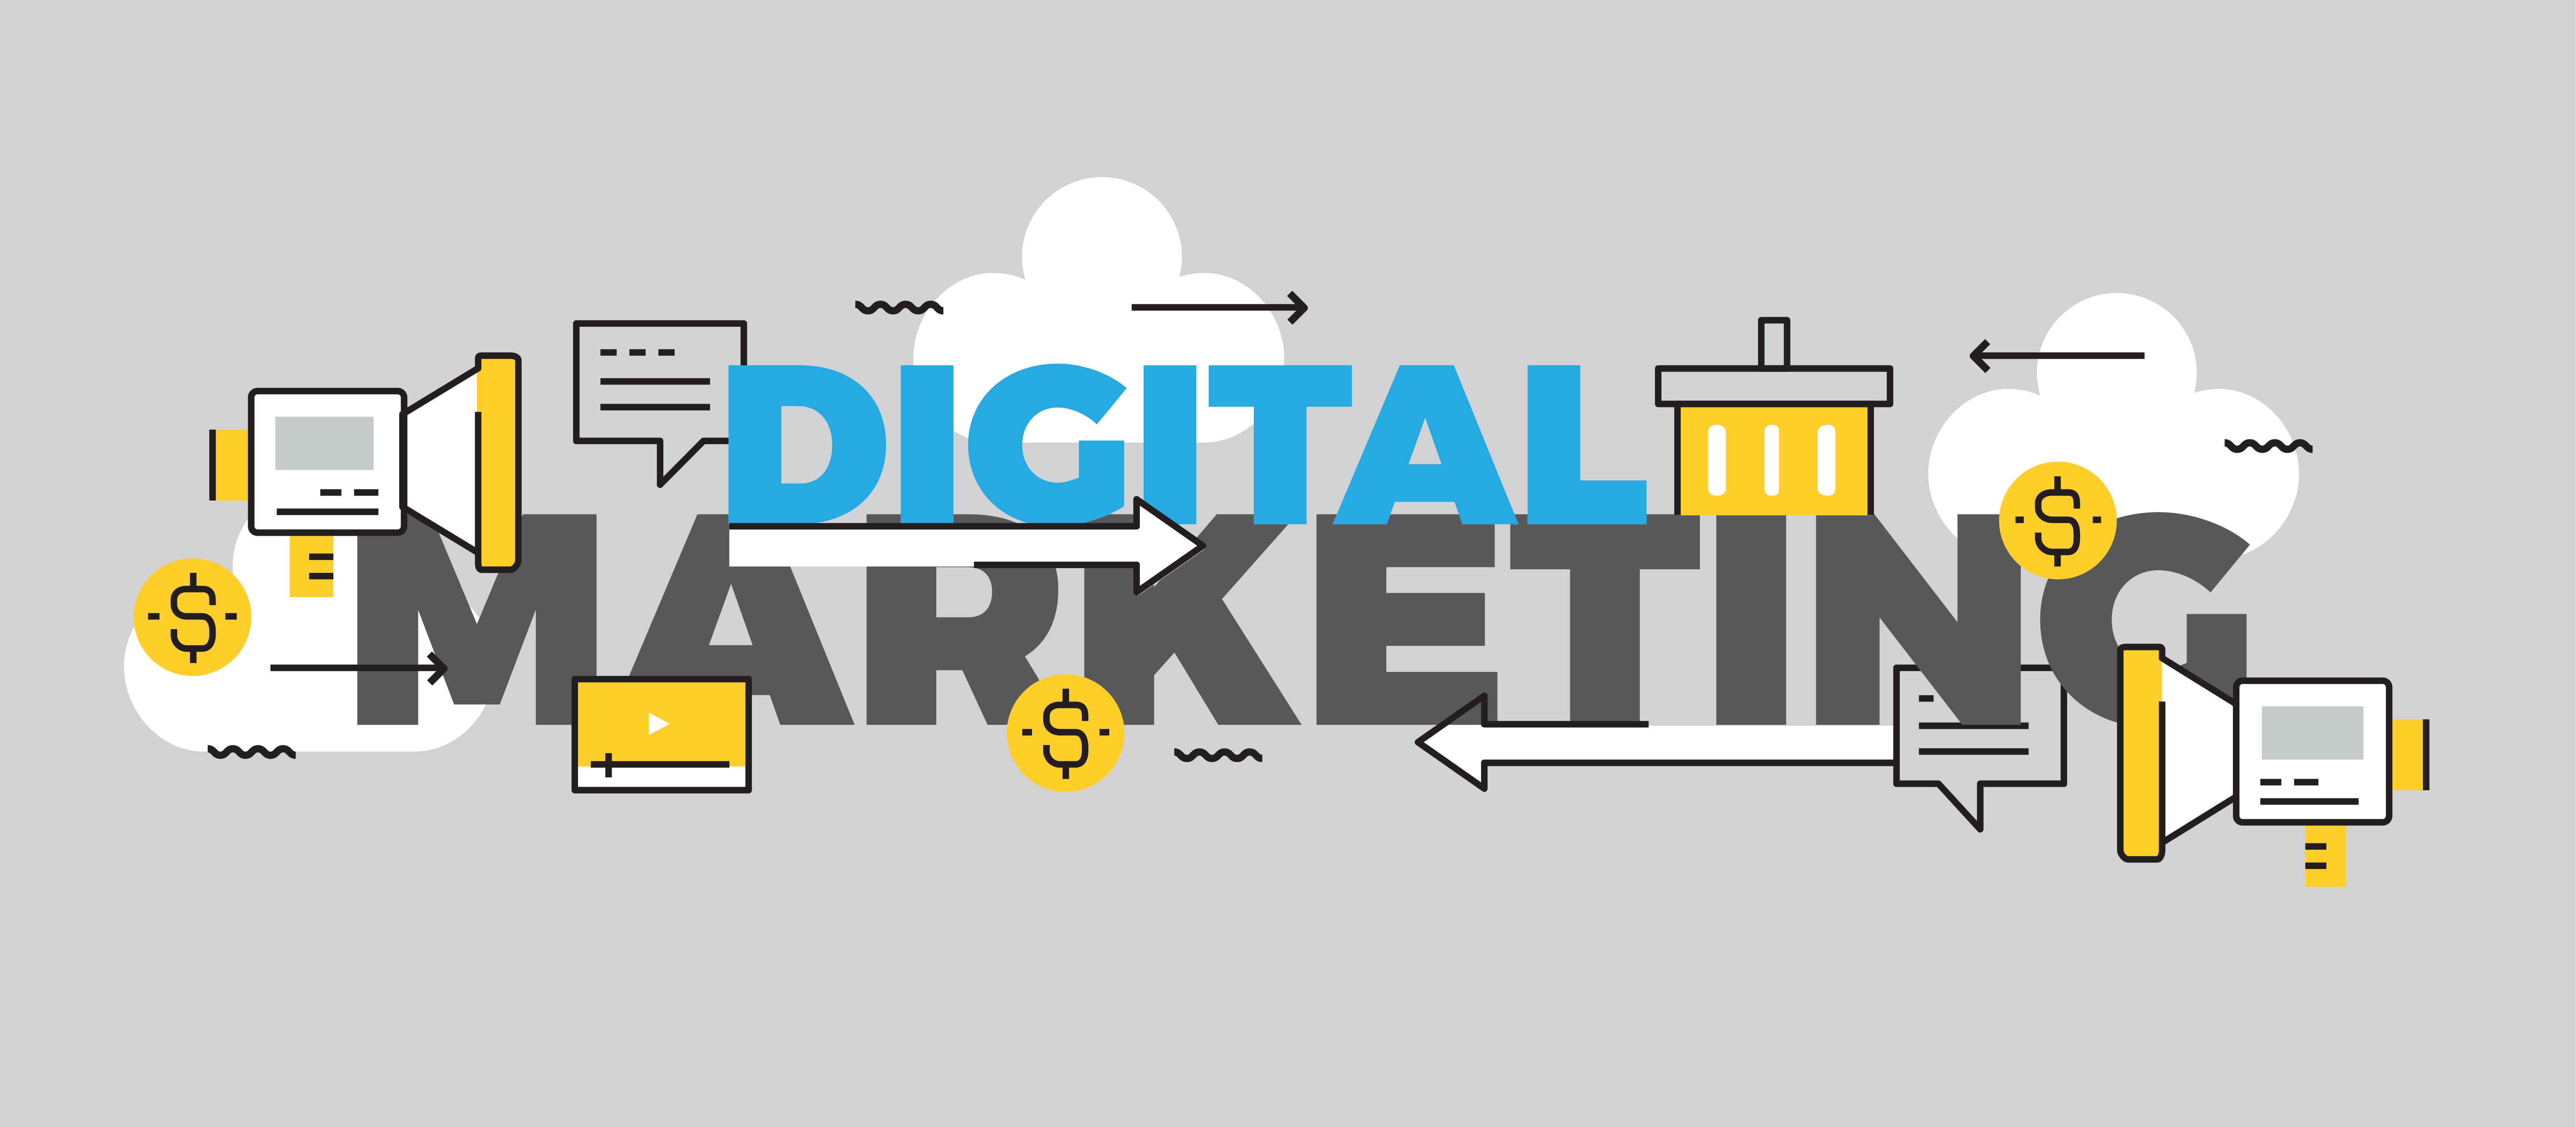 Digital-marketing-01-b2b-marketing-plan.jpg